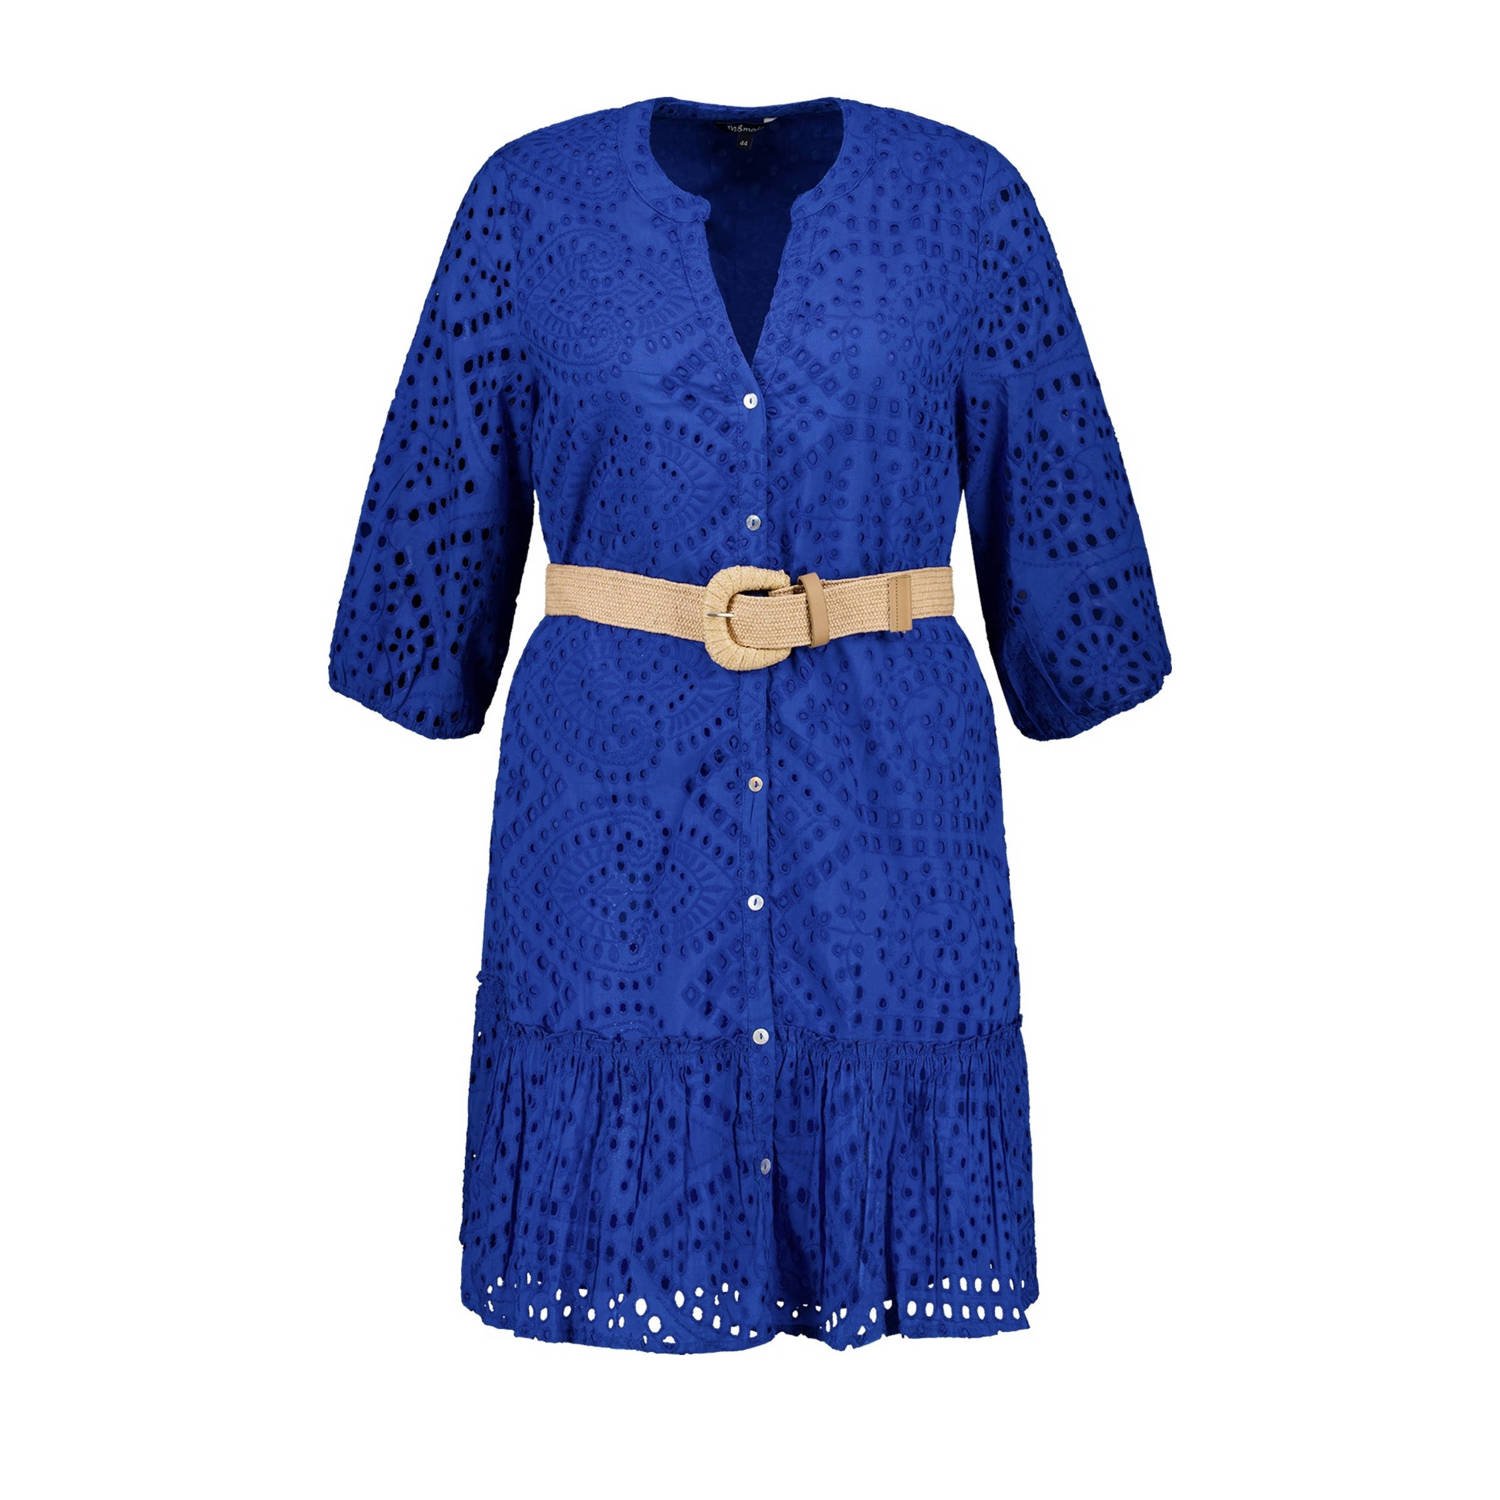 MS Mode jurk blauw